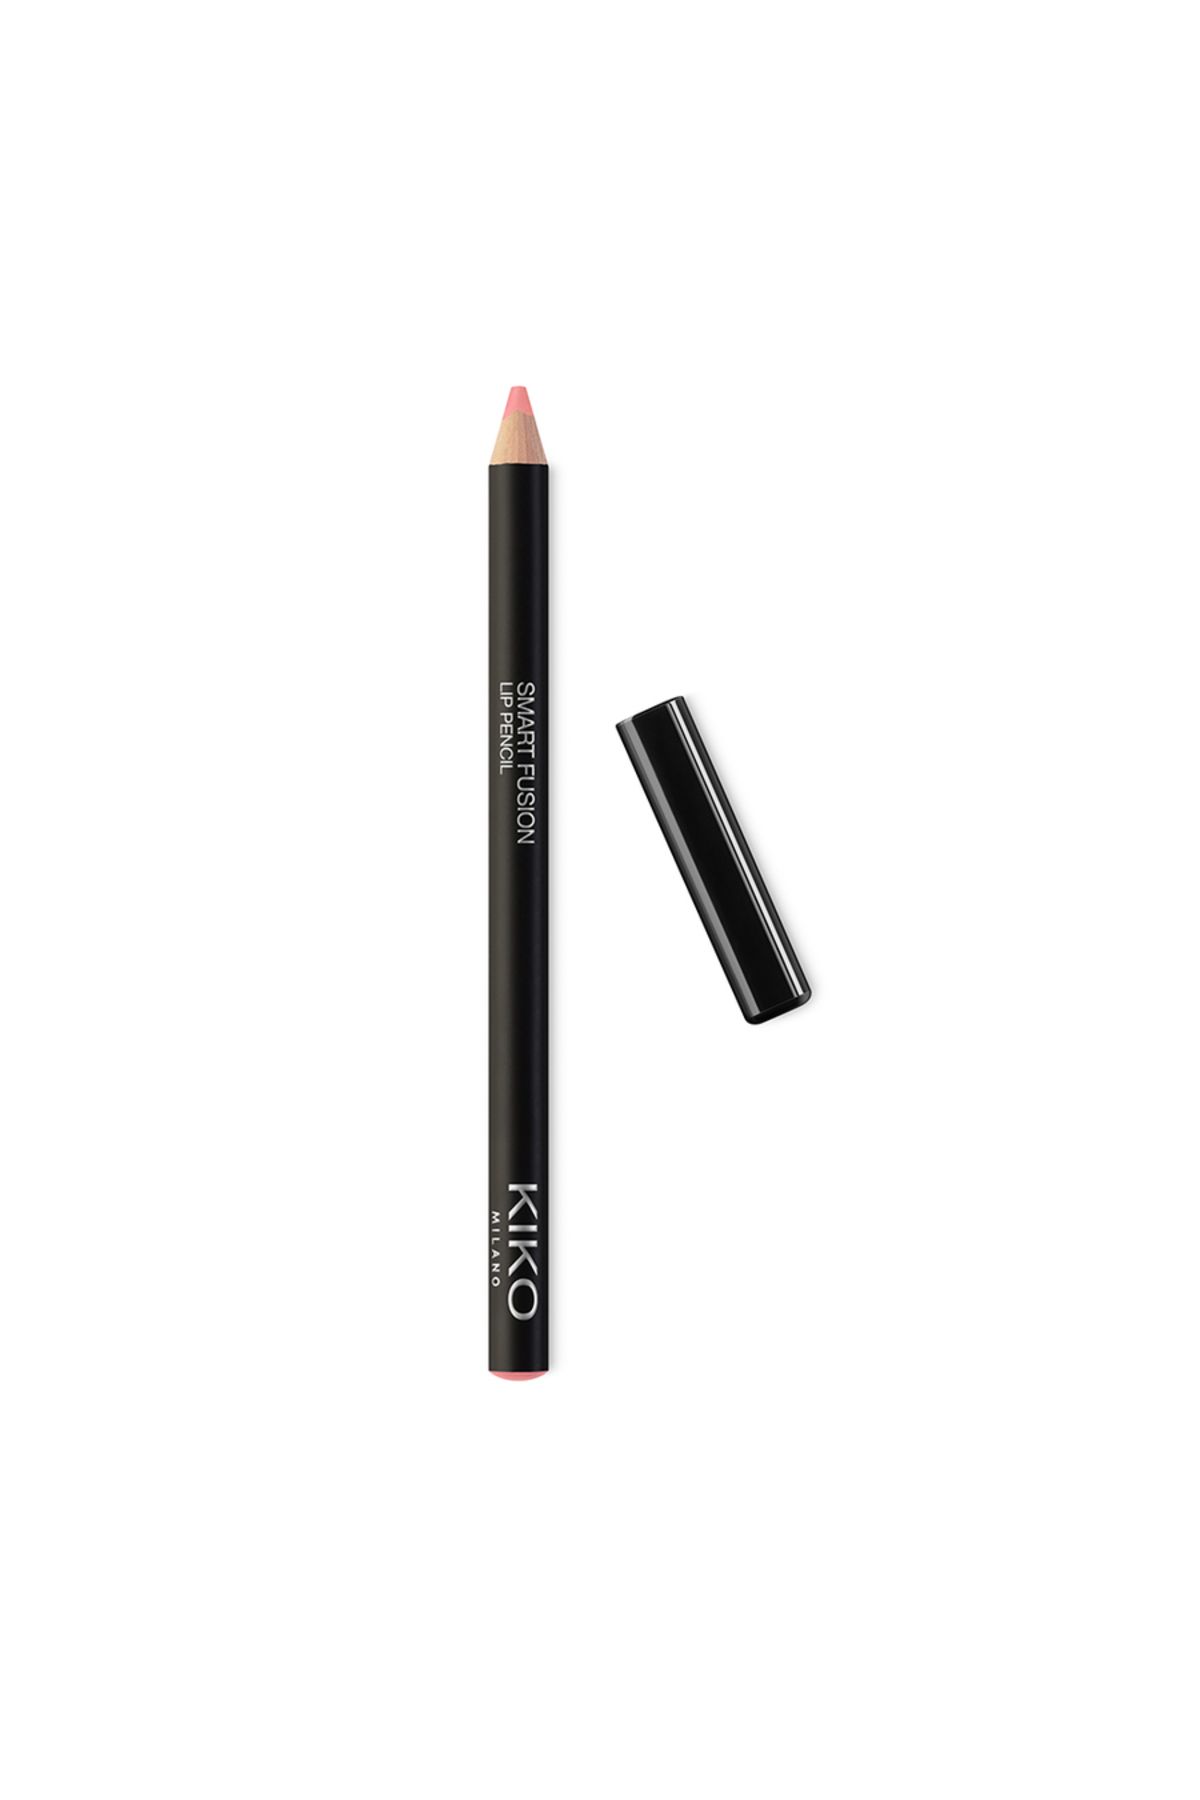 KIKO DUDAK KALEMİ - Smart Fusion Lip Pencil - 503 Soft Rose